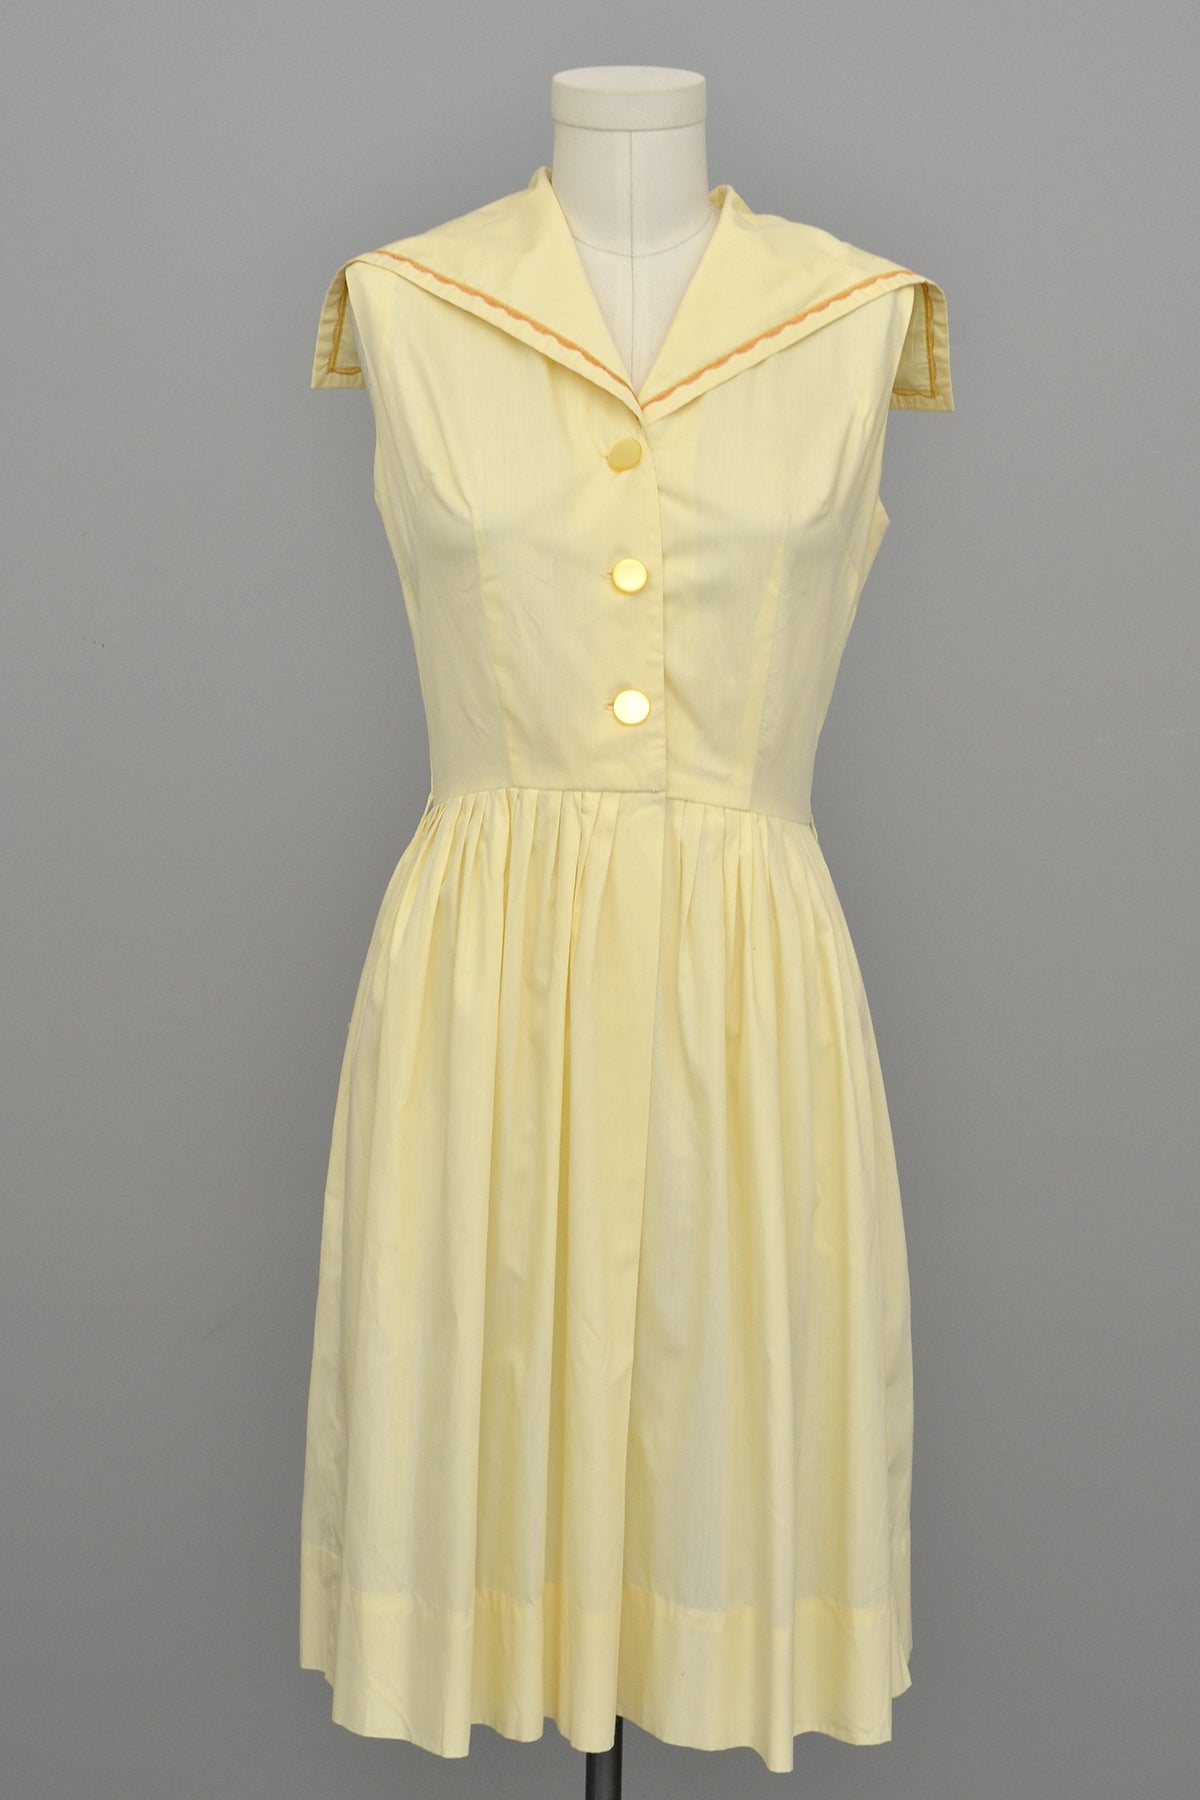 1950s Yellow Cotton Sailor Dress